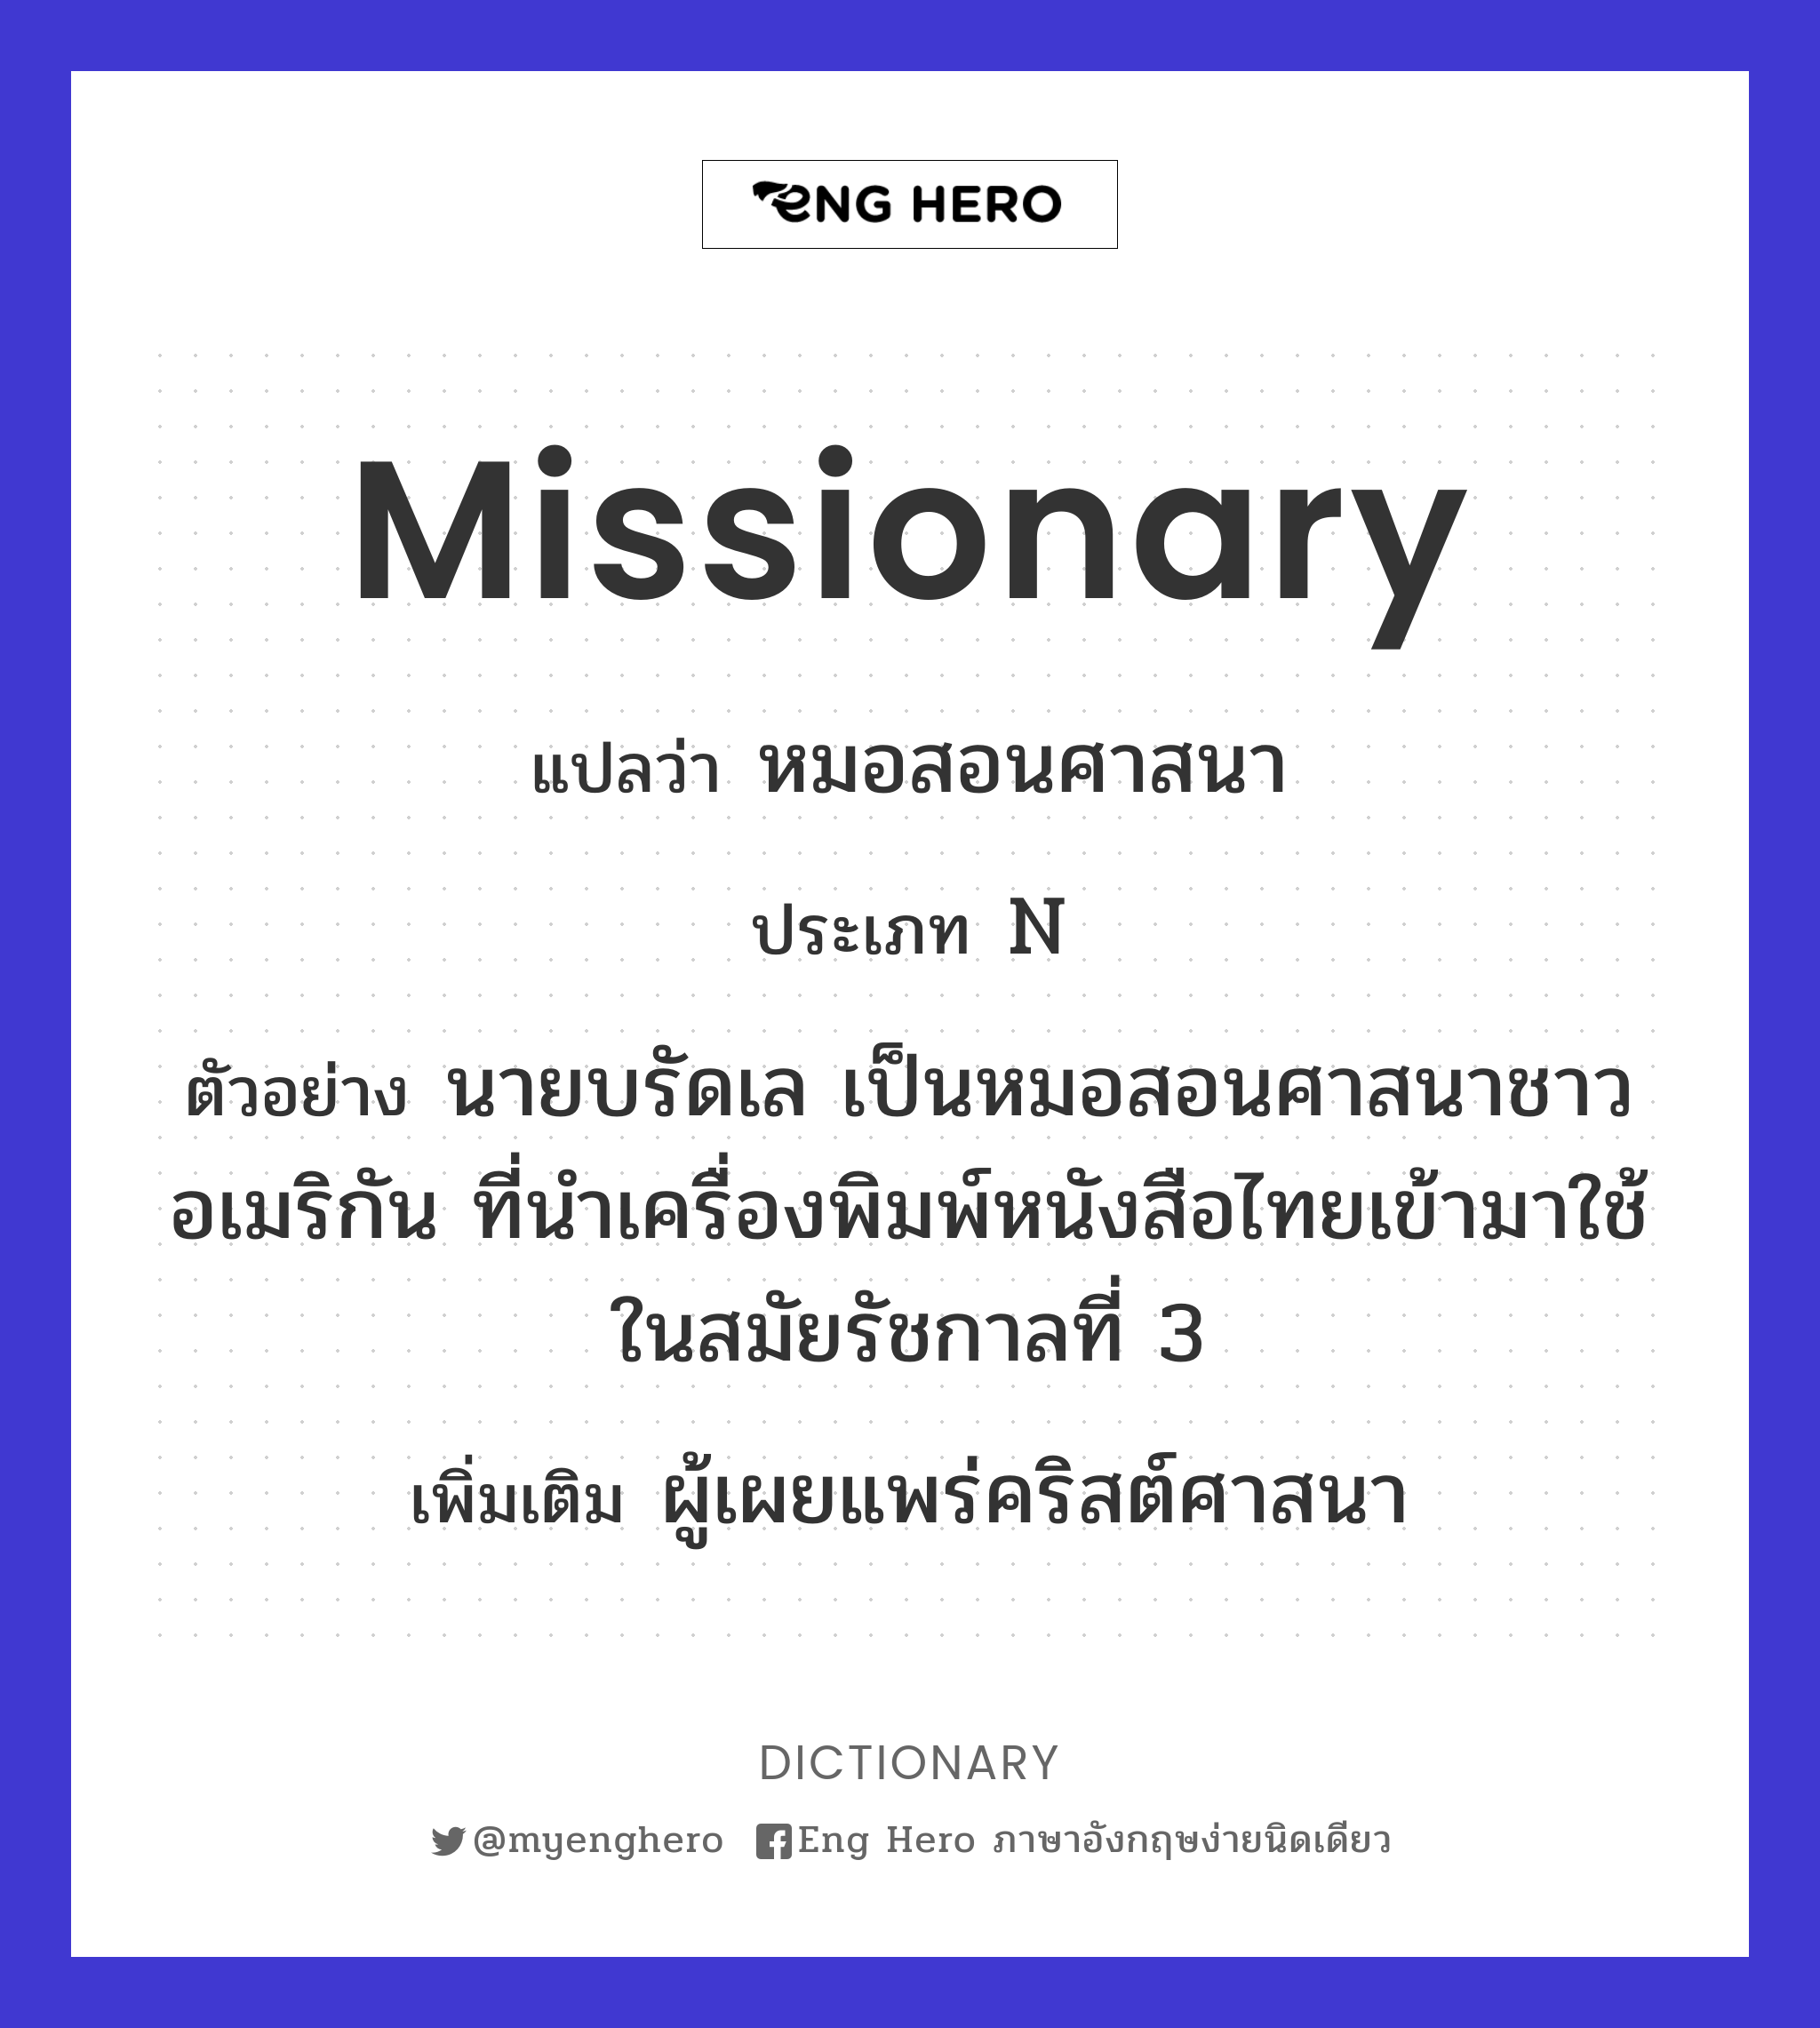 missionary